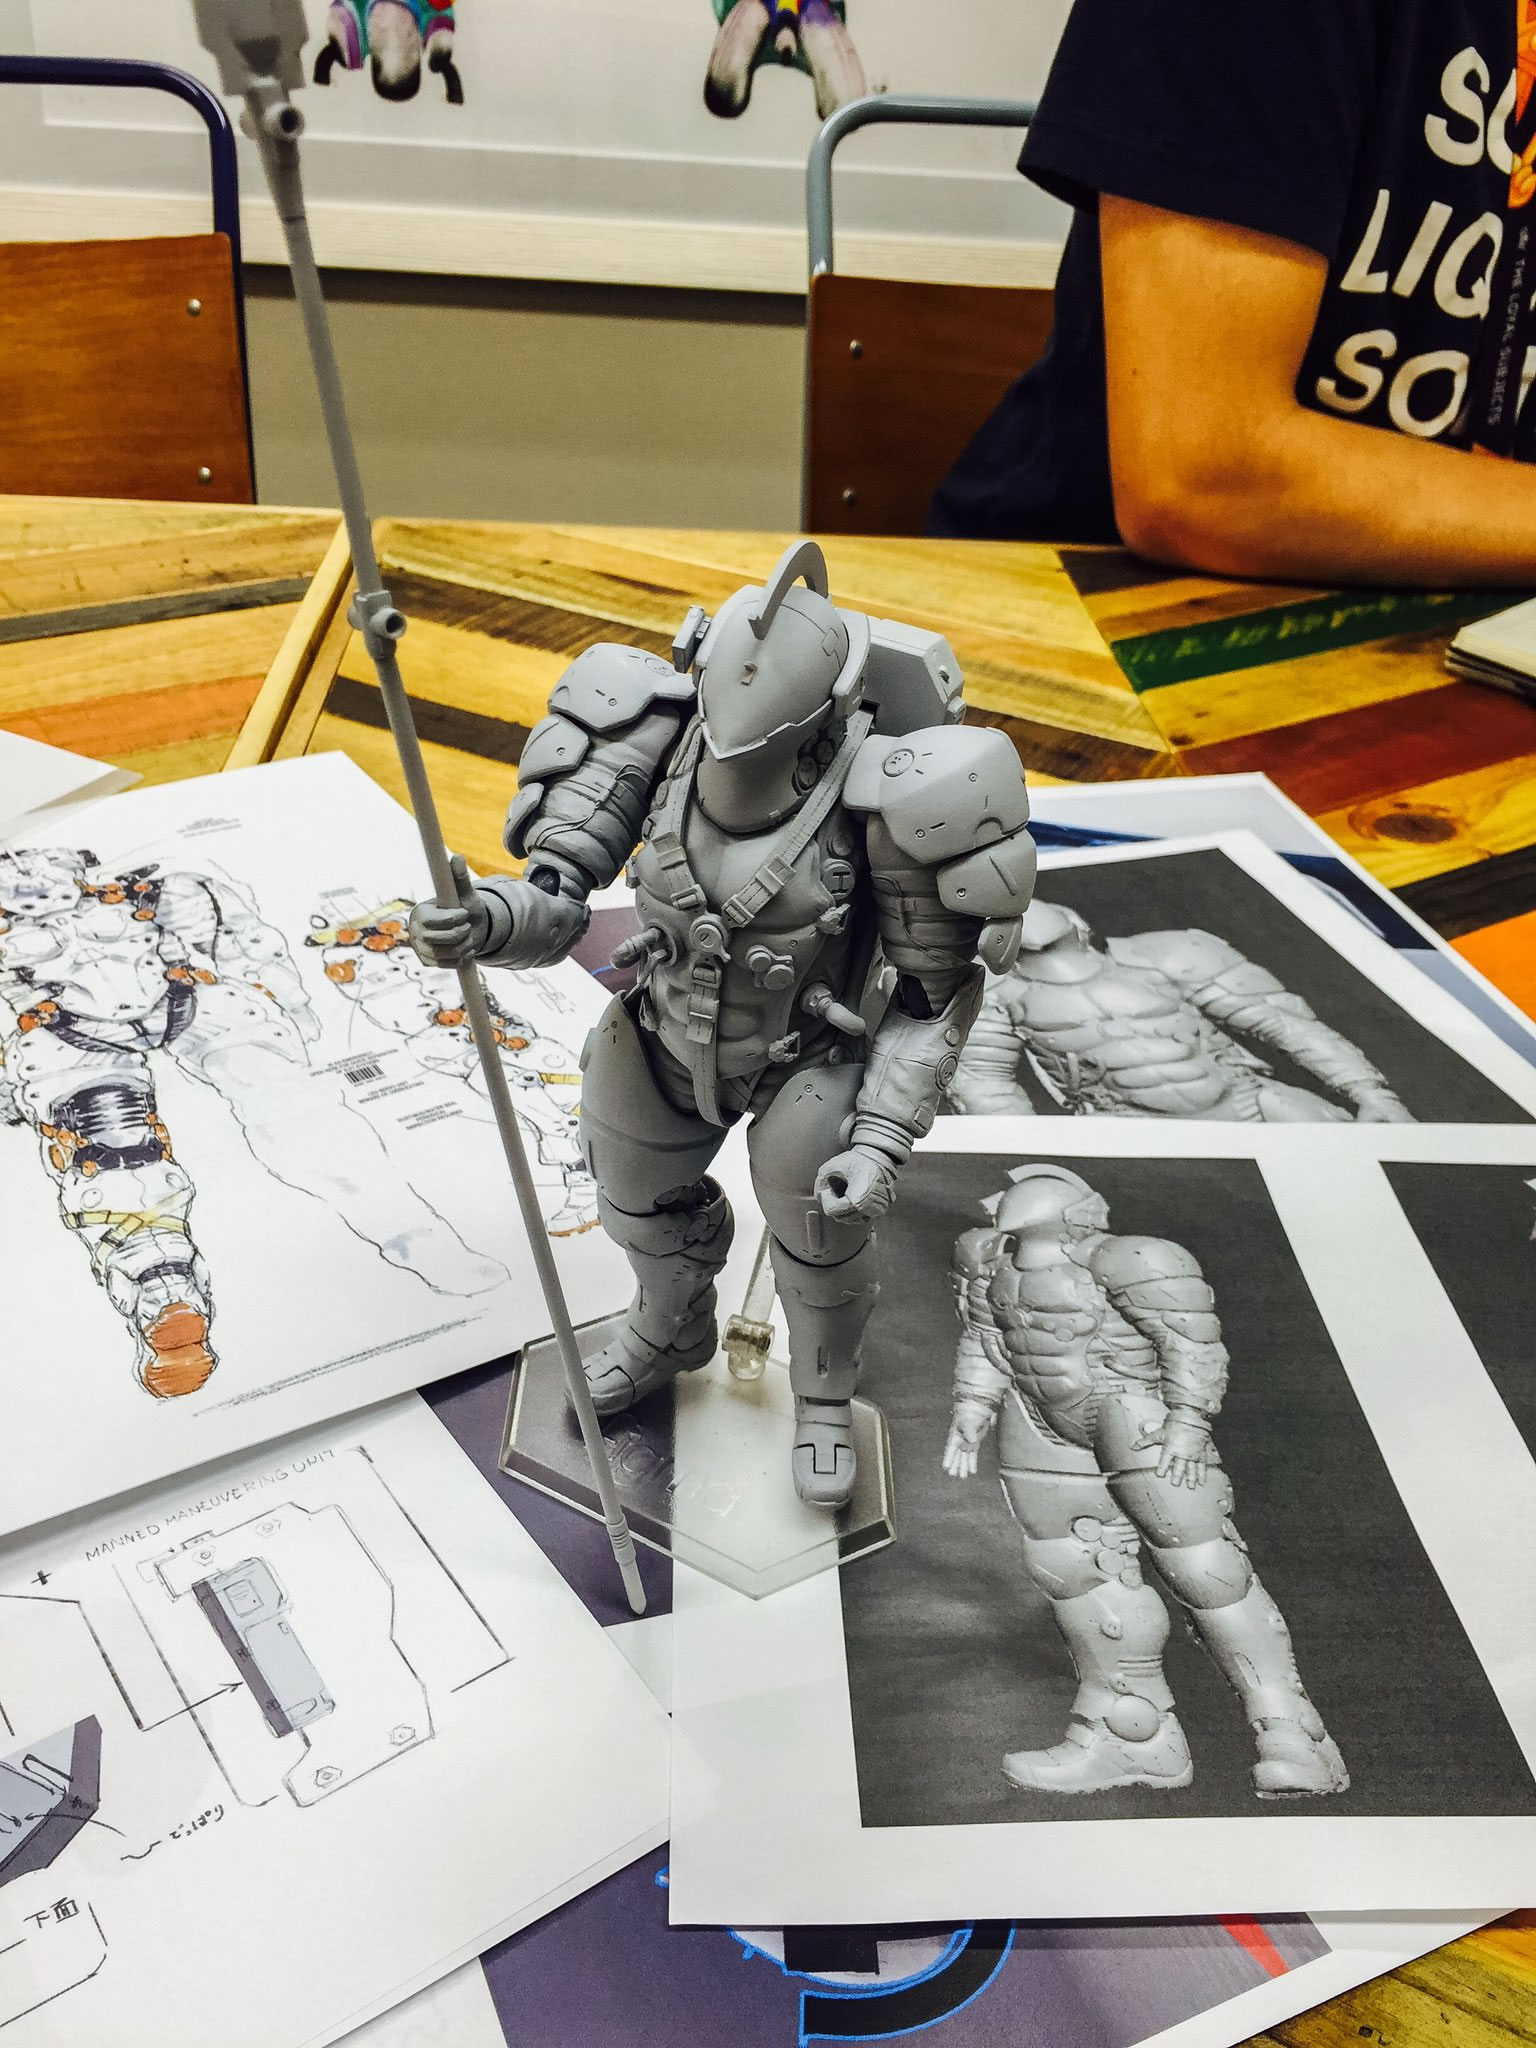 Figurine Figma de Ludens, la mascotte de Kojima Productions – 12 octobre 2016